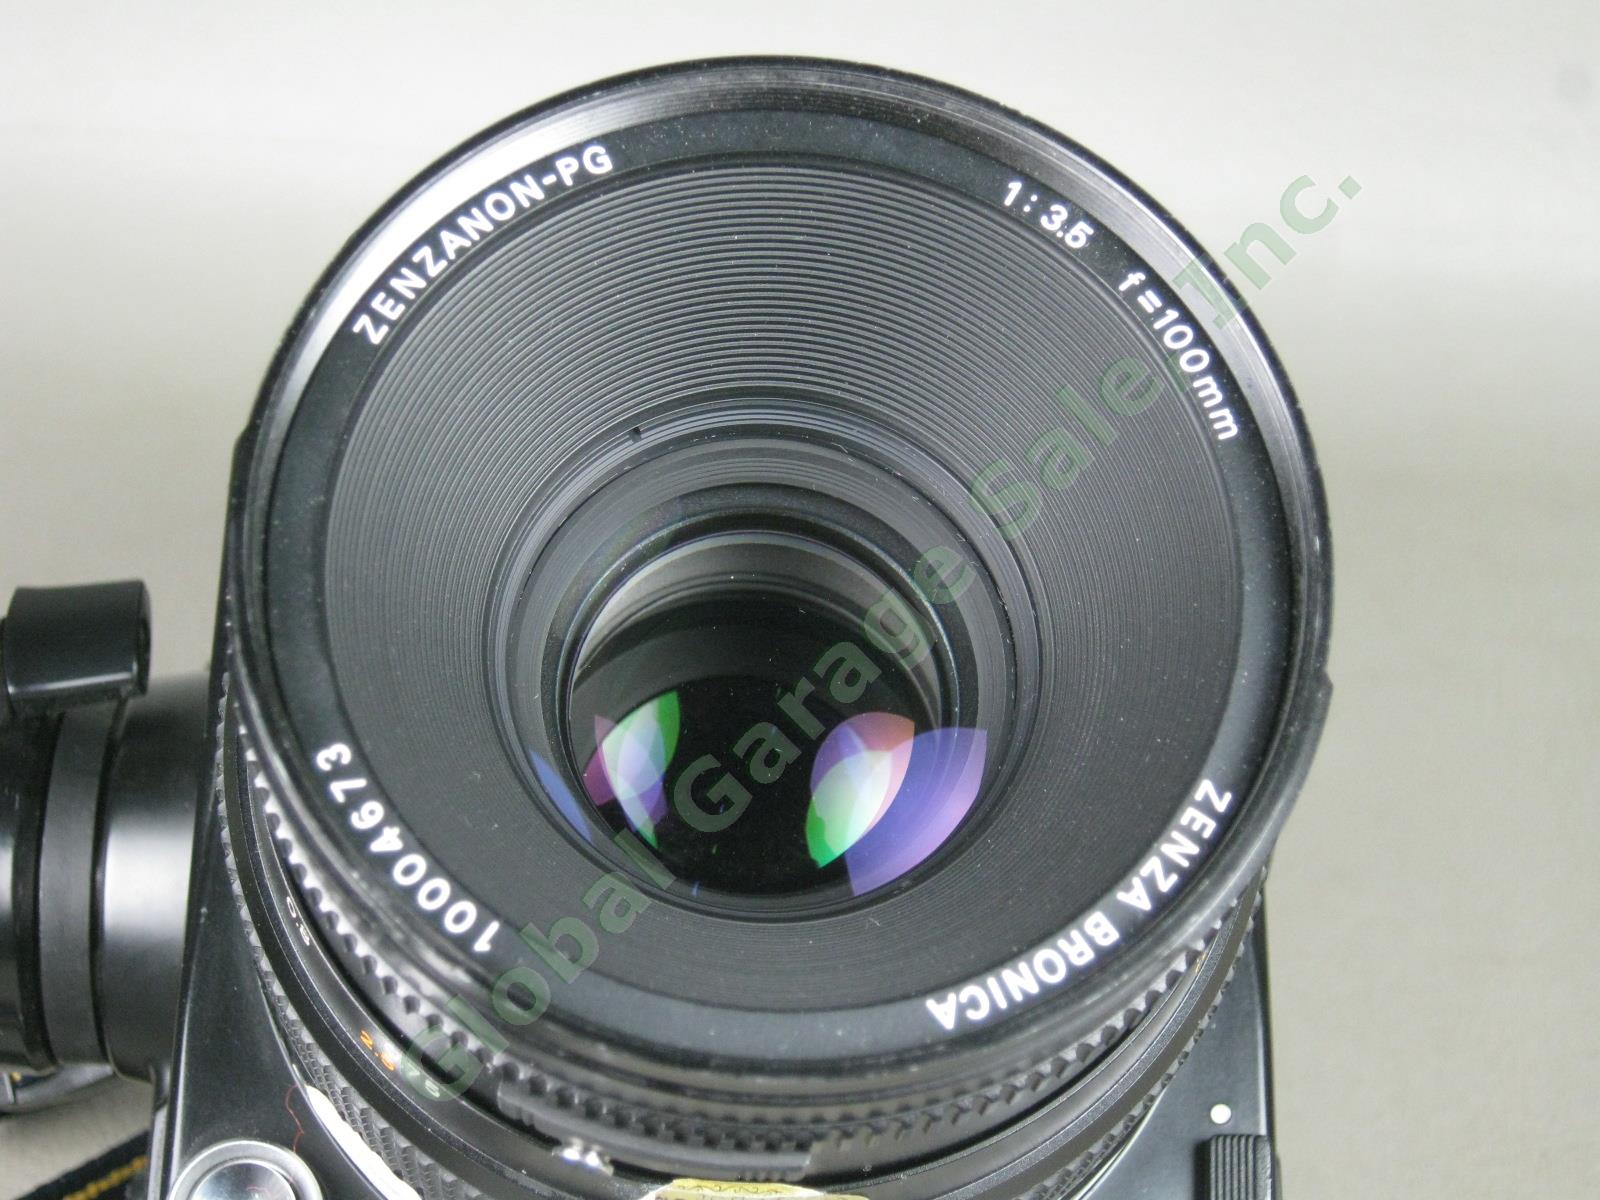 Bronica GS-1 6x7 Medium Format Camera Zenzanon-PG 100mm Lens Backs Grip Bundle 7